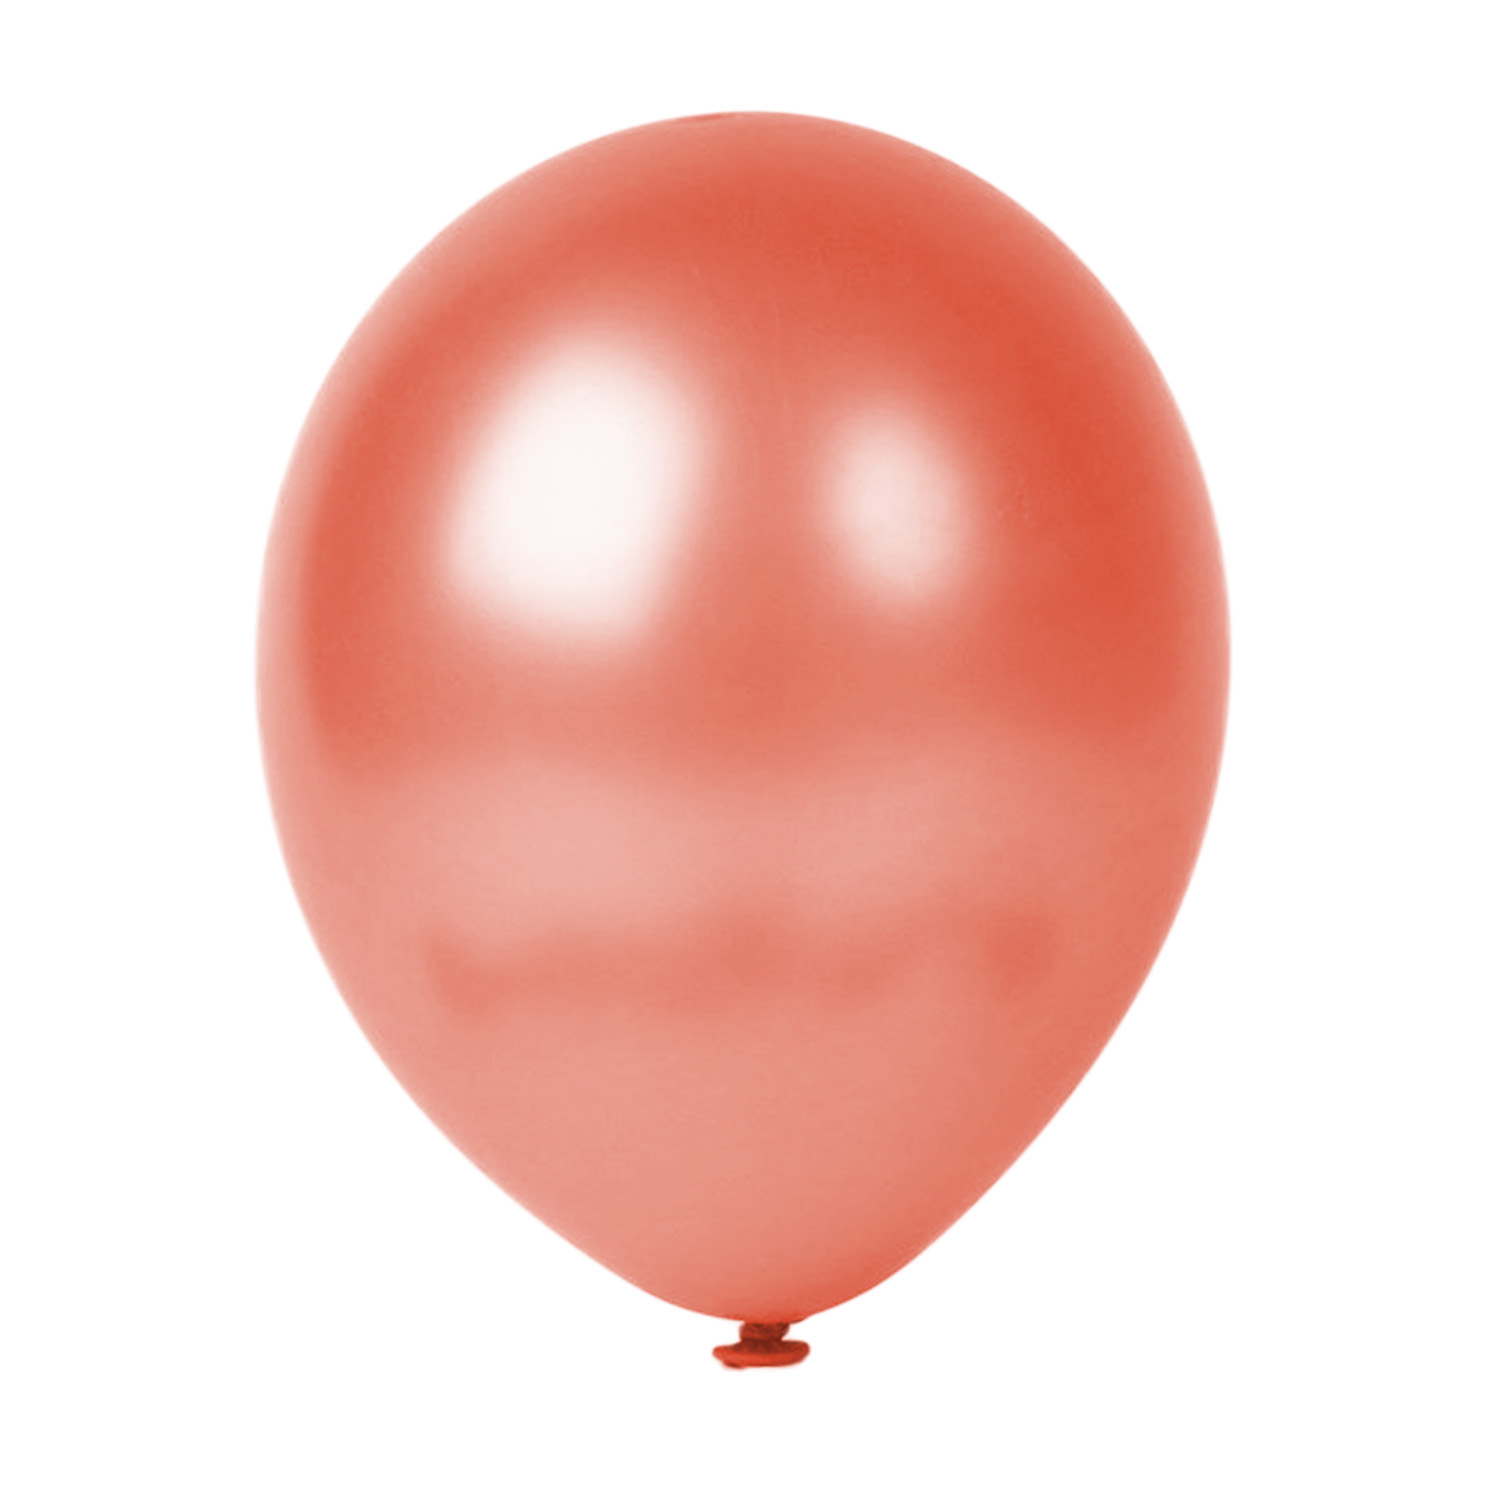 100er SET - Latex Luftballon - 12inch - Rotorange - hell - Metallic (glänzend)